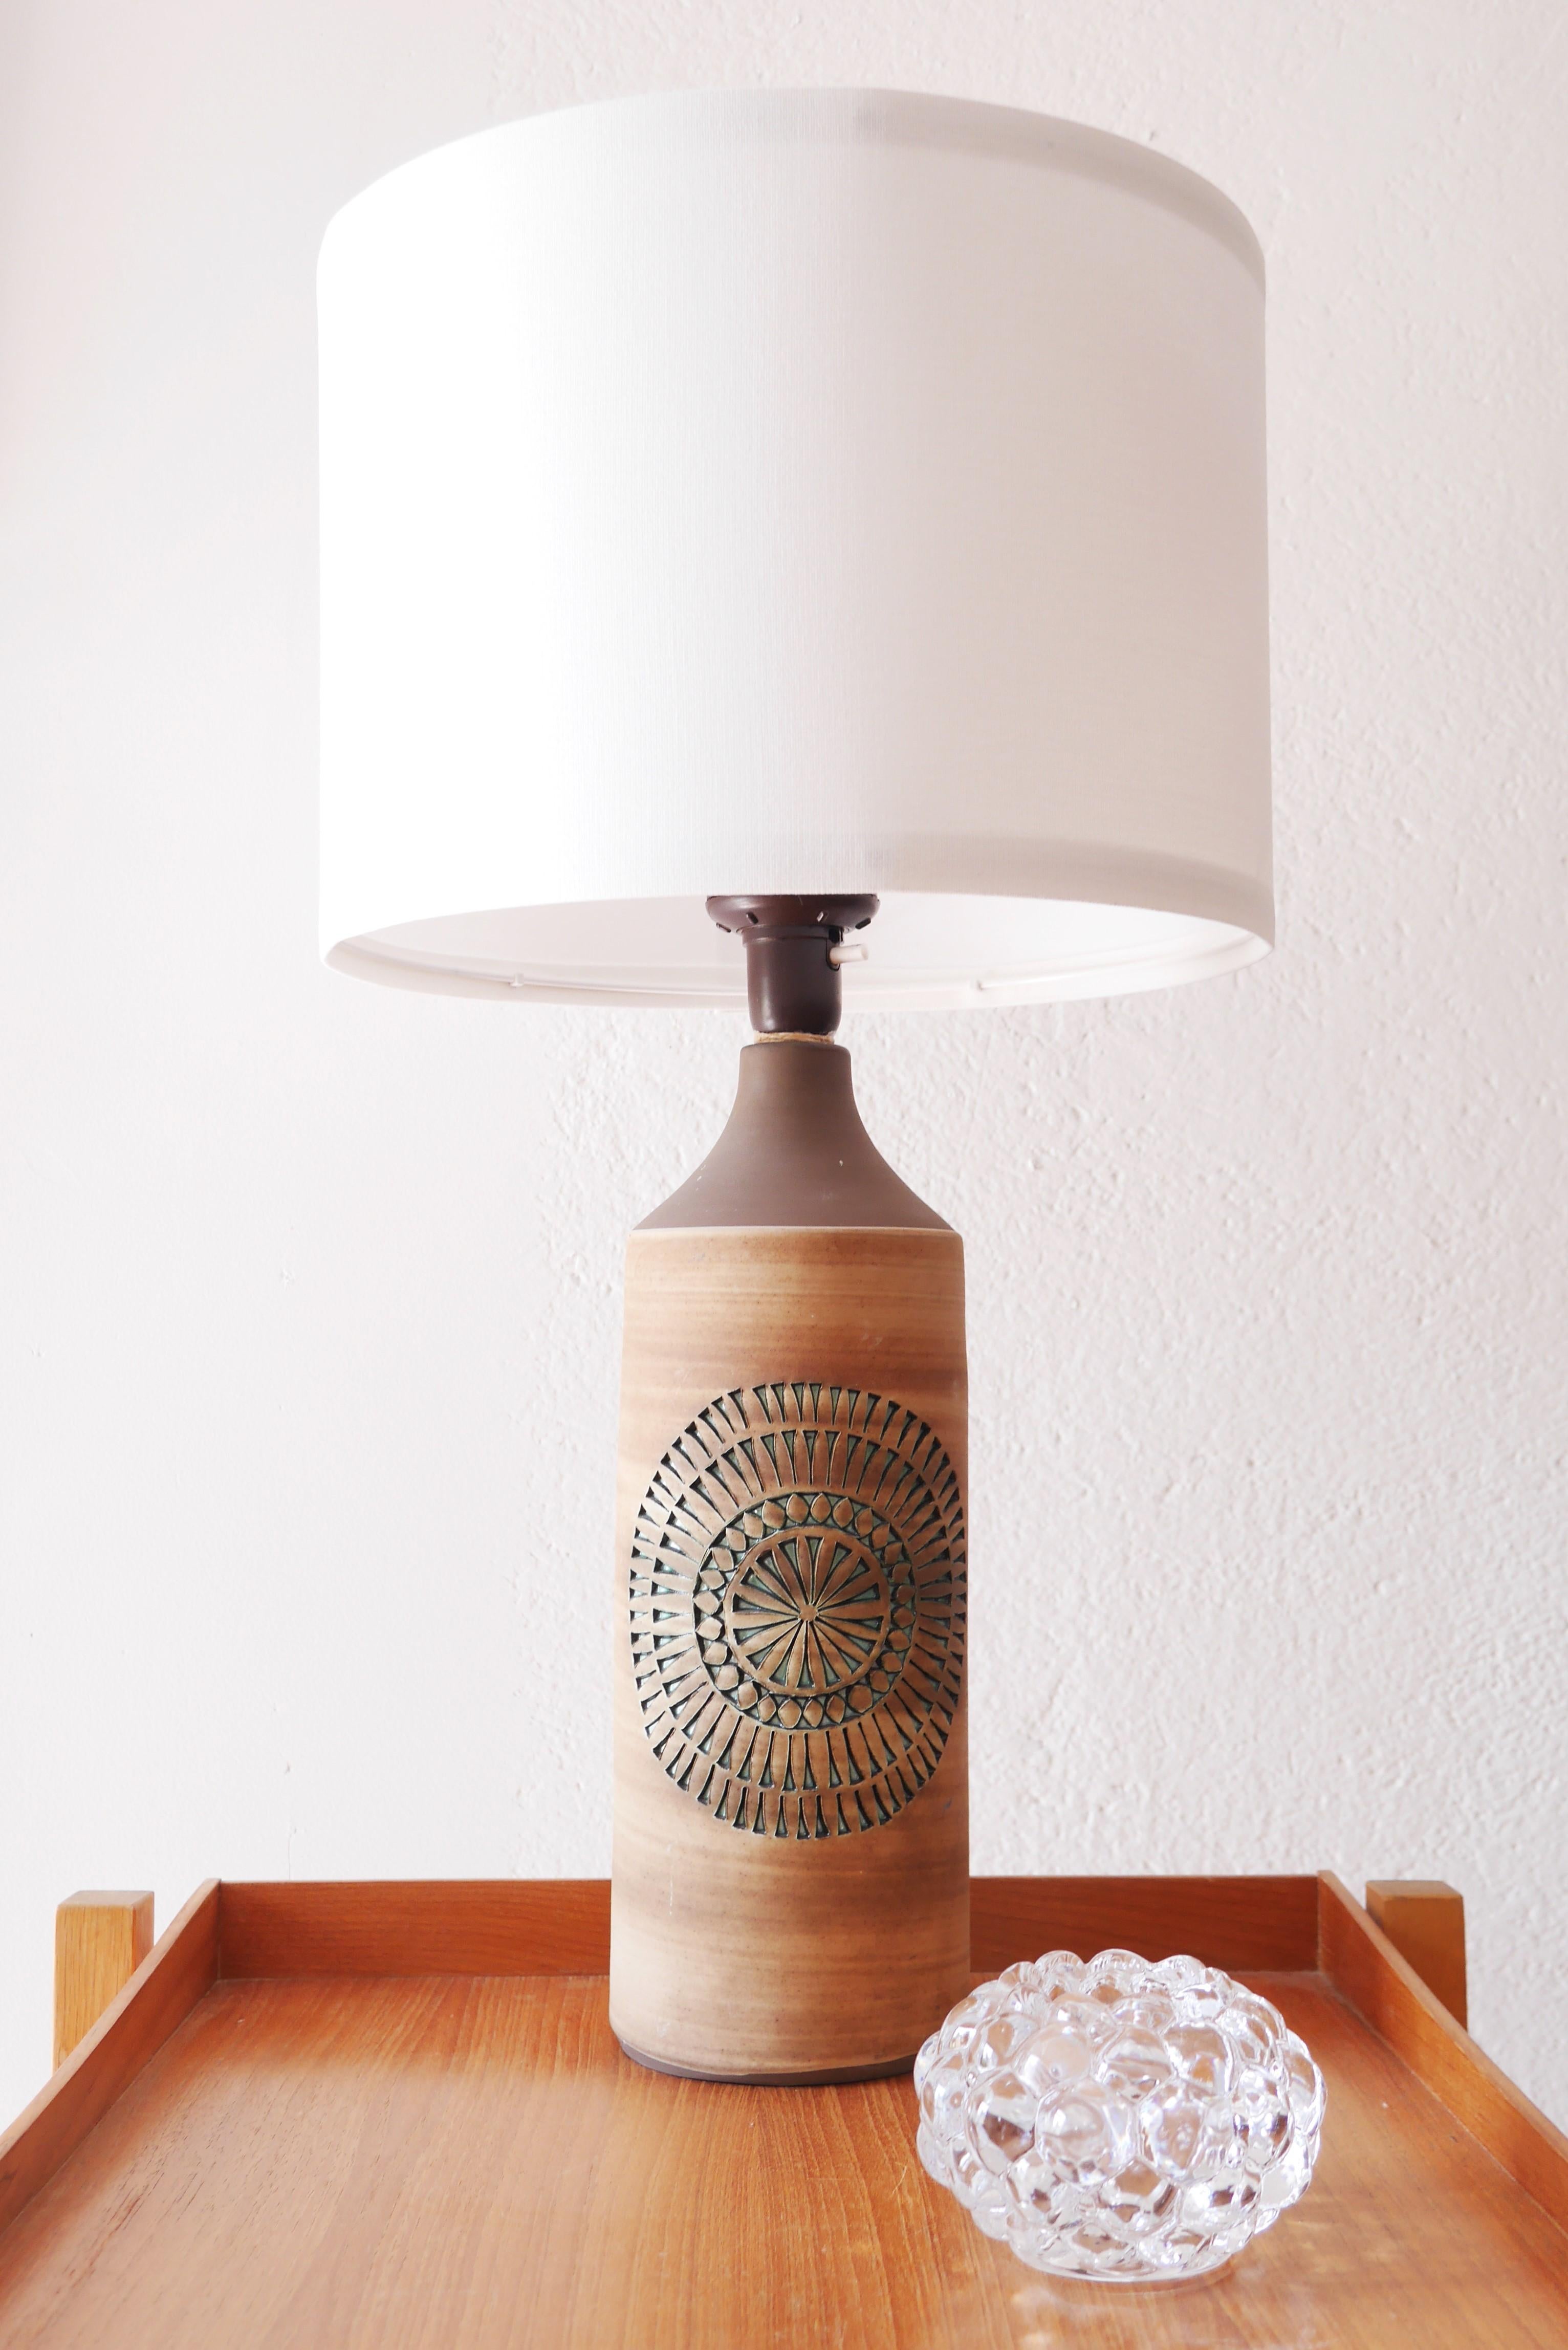 Hand-Crafted Ceramic Lamp Base from Alingsås, Sweden